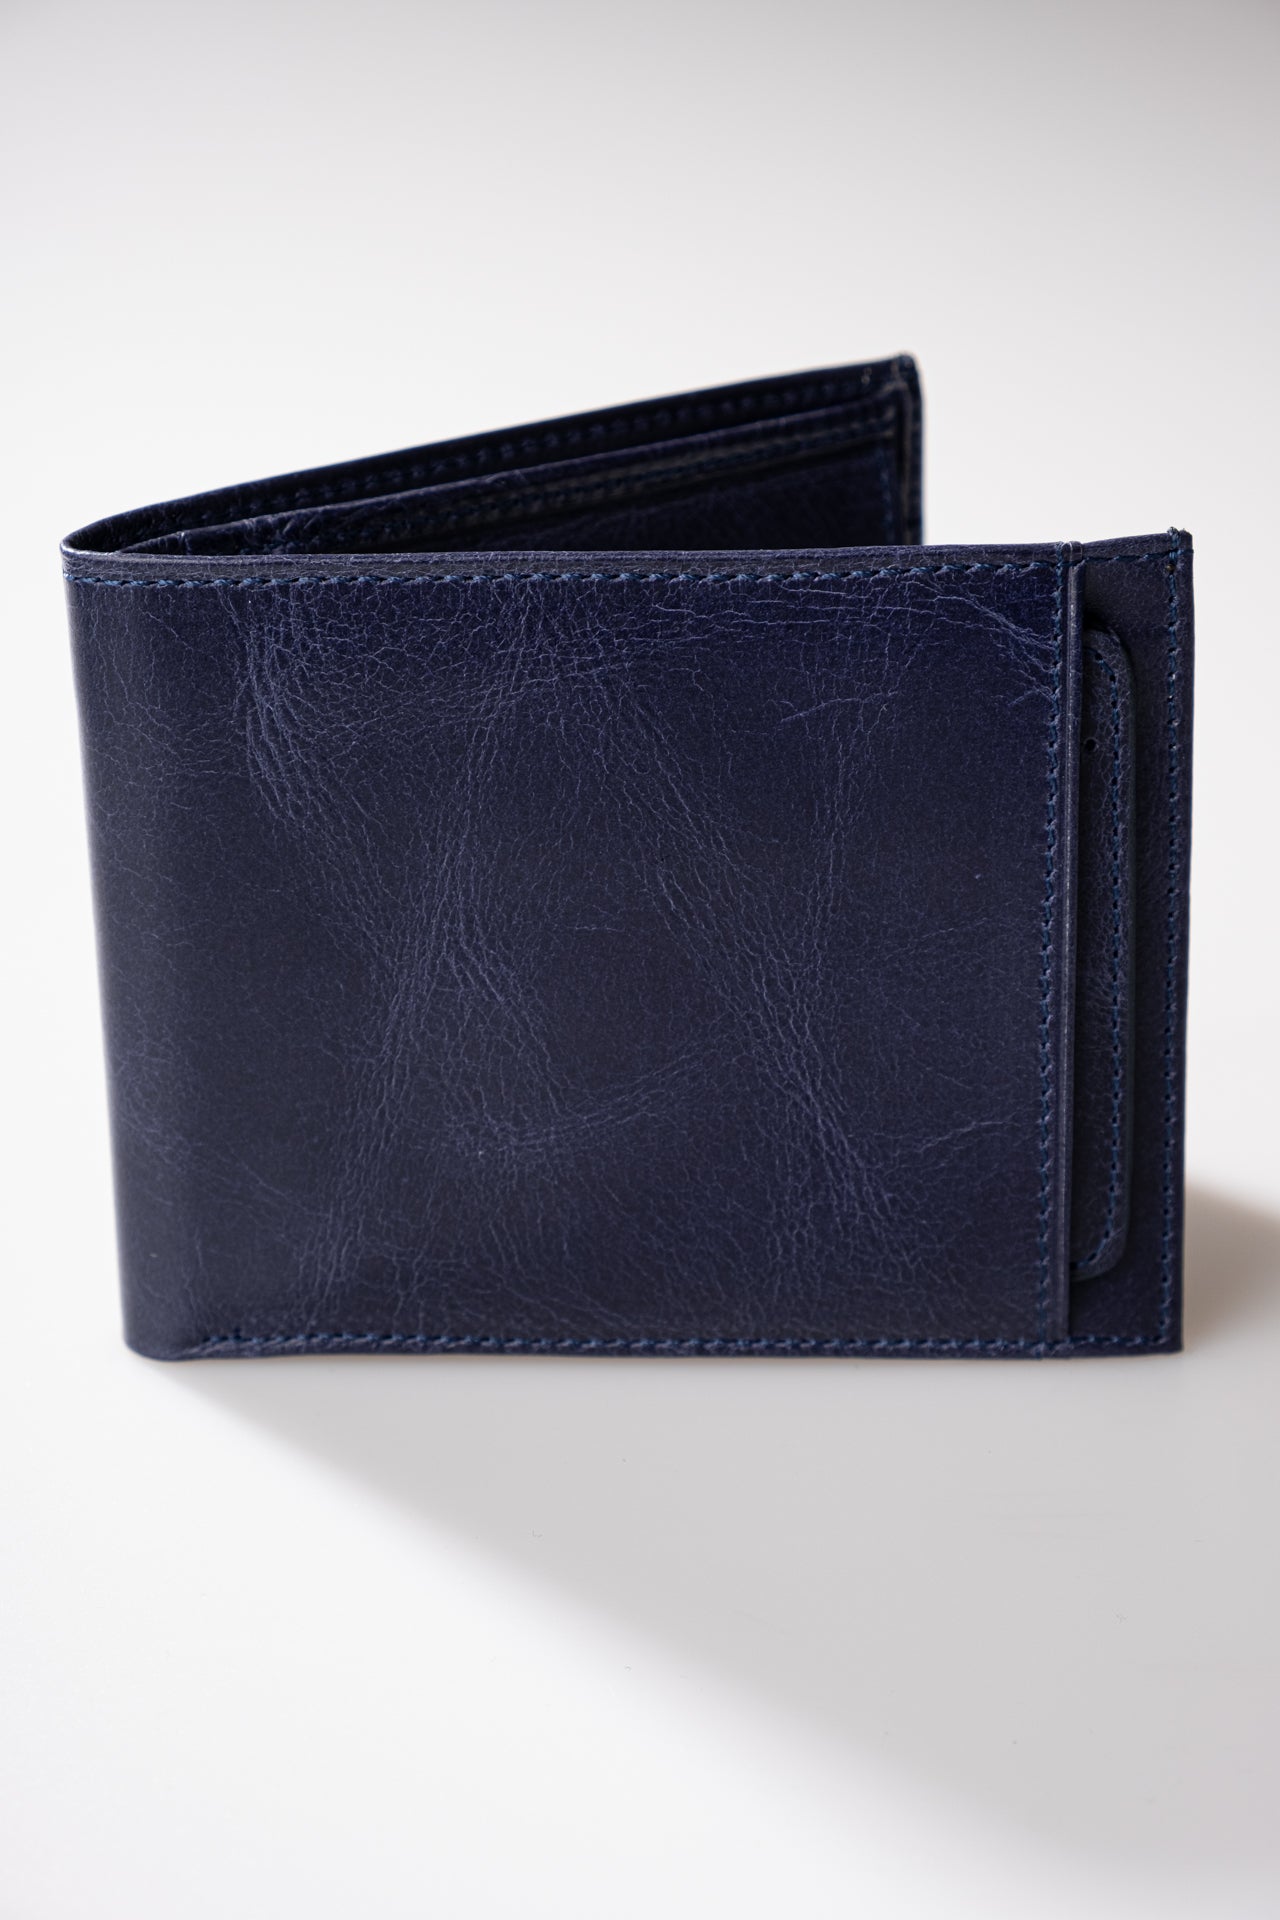 Miss Checker Slim Mens Wallet Minimalist Bifold Wallet Leather